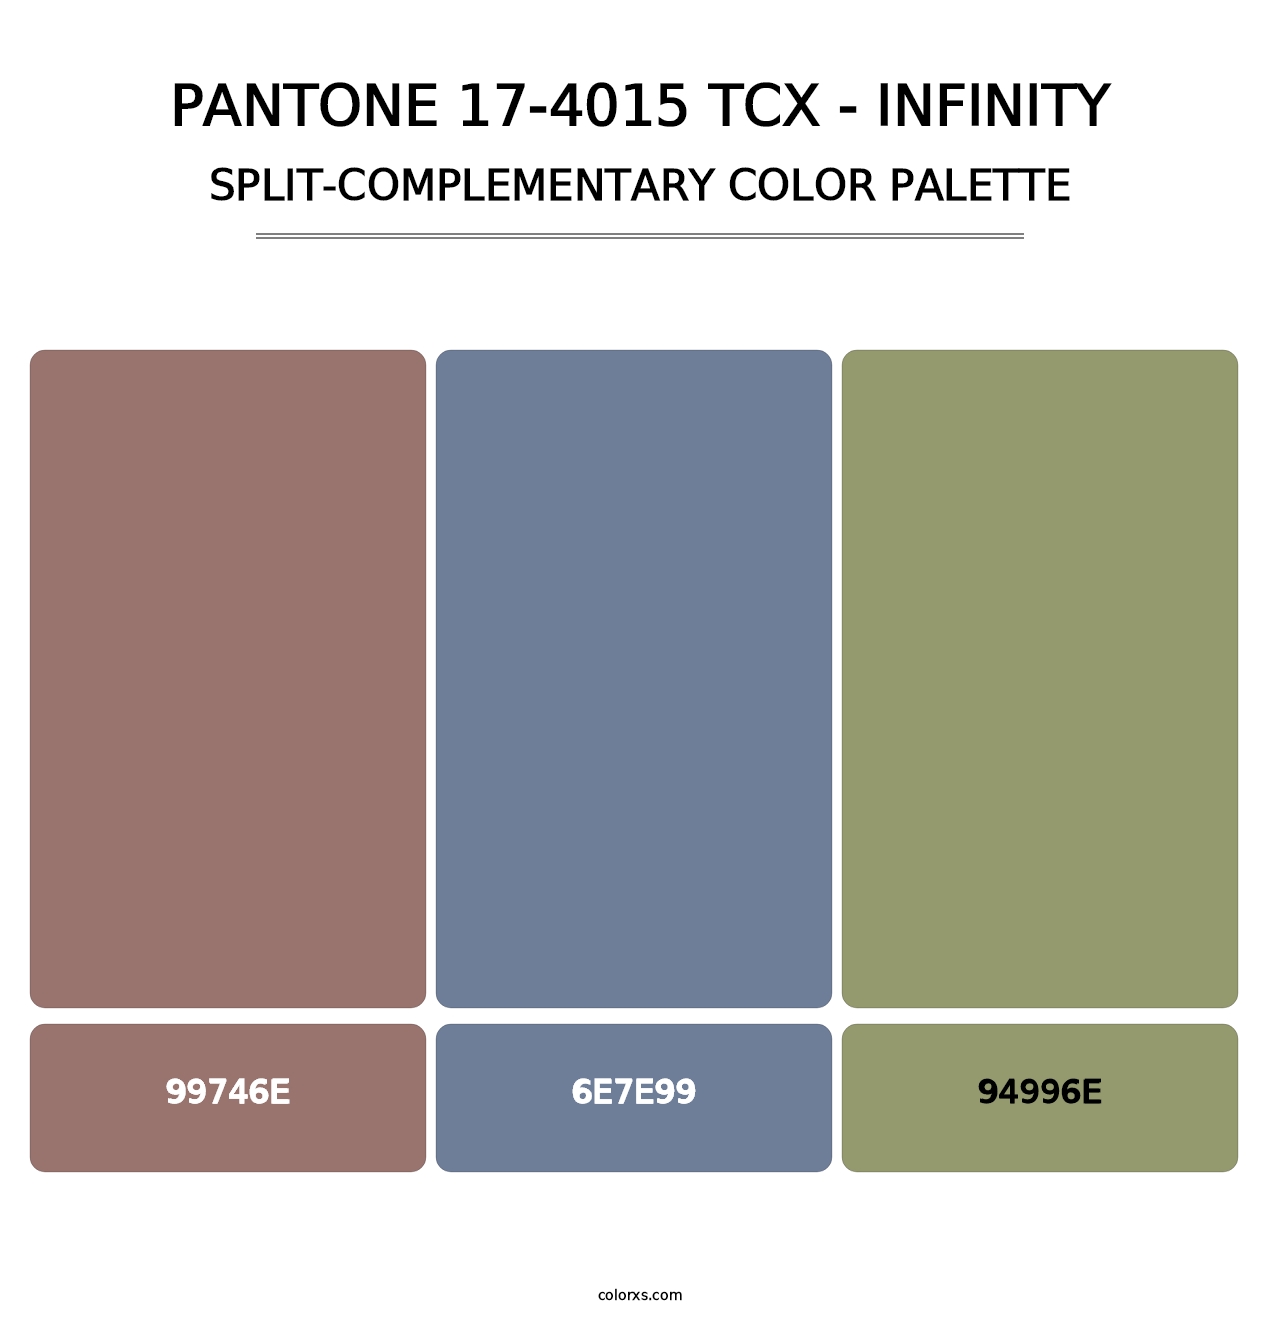 PANTONE 17-4015 TCX - Infinity - Split-Complementary Color Palette